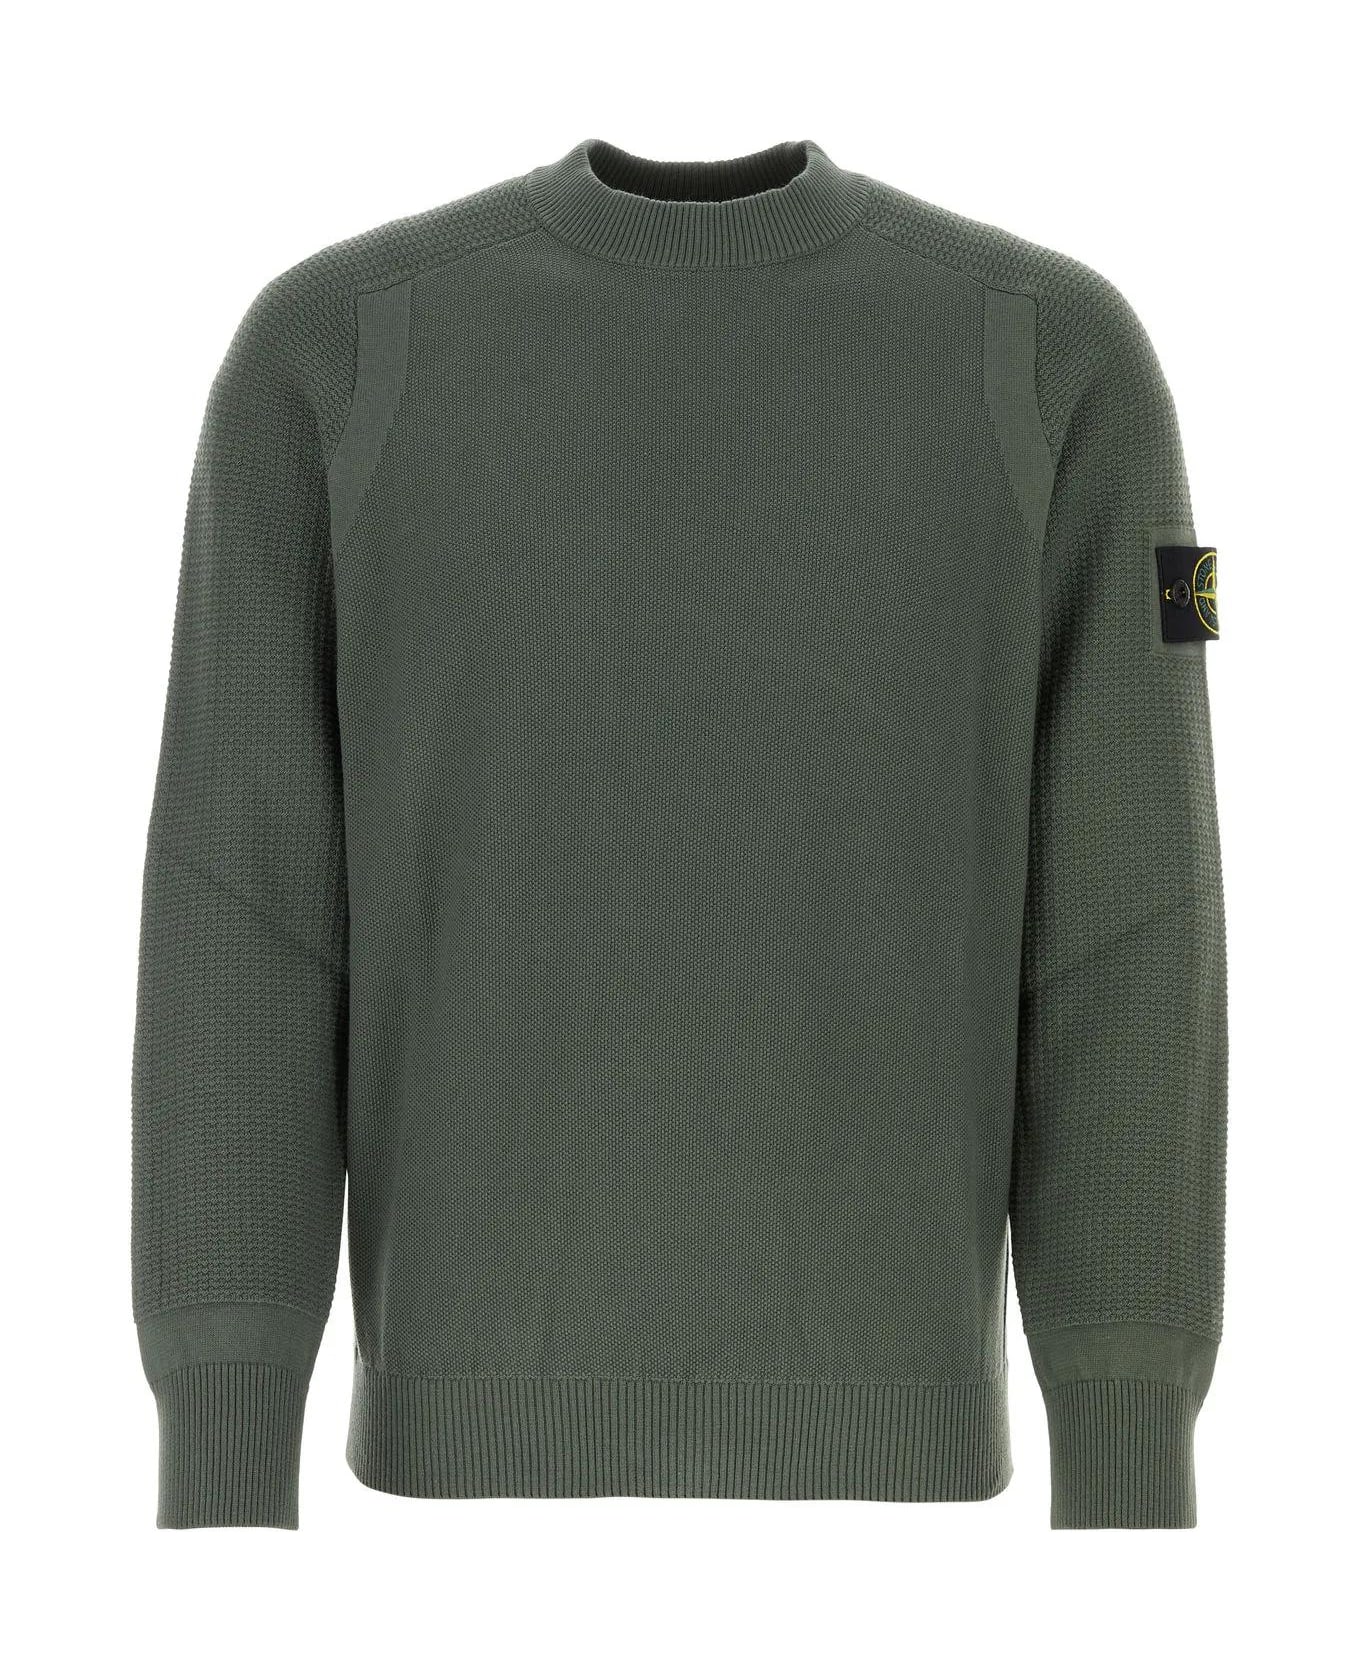 Stone Island Sage Green Cotton Sweater - Verde